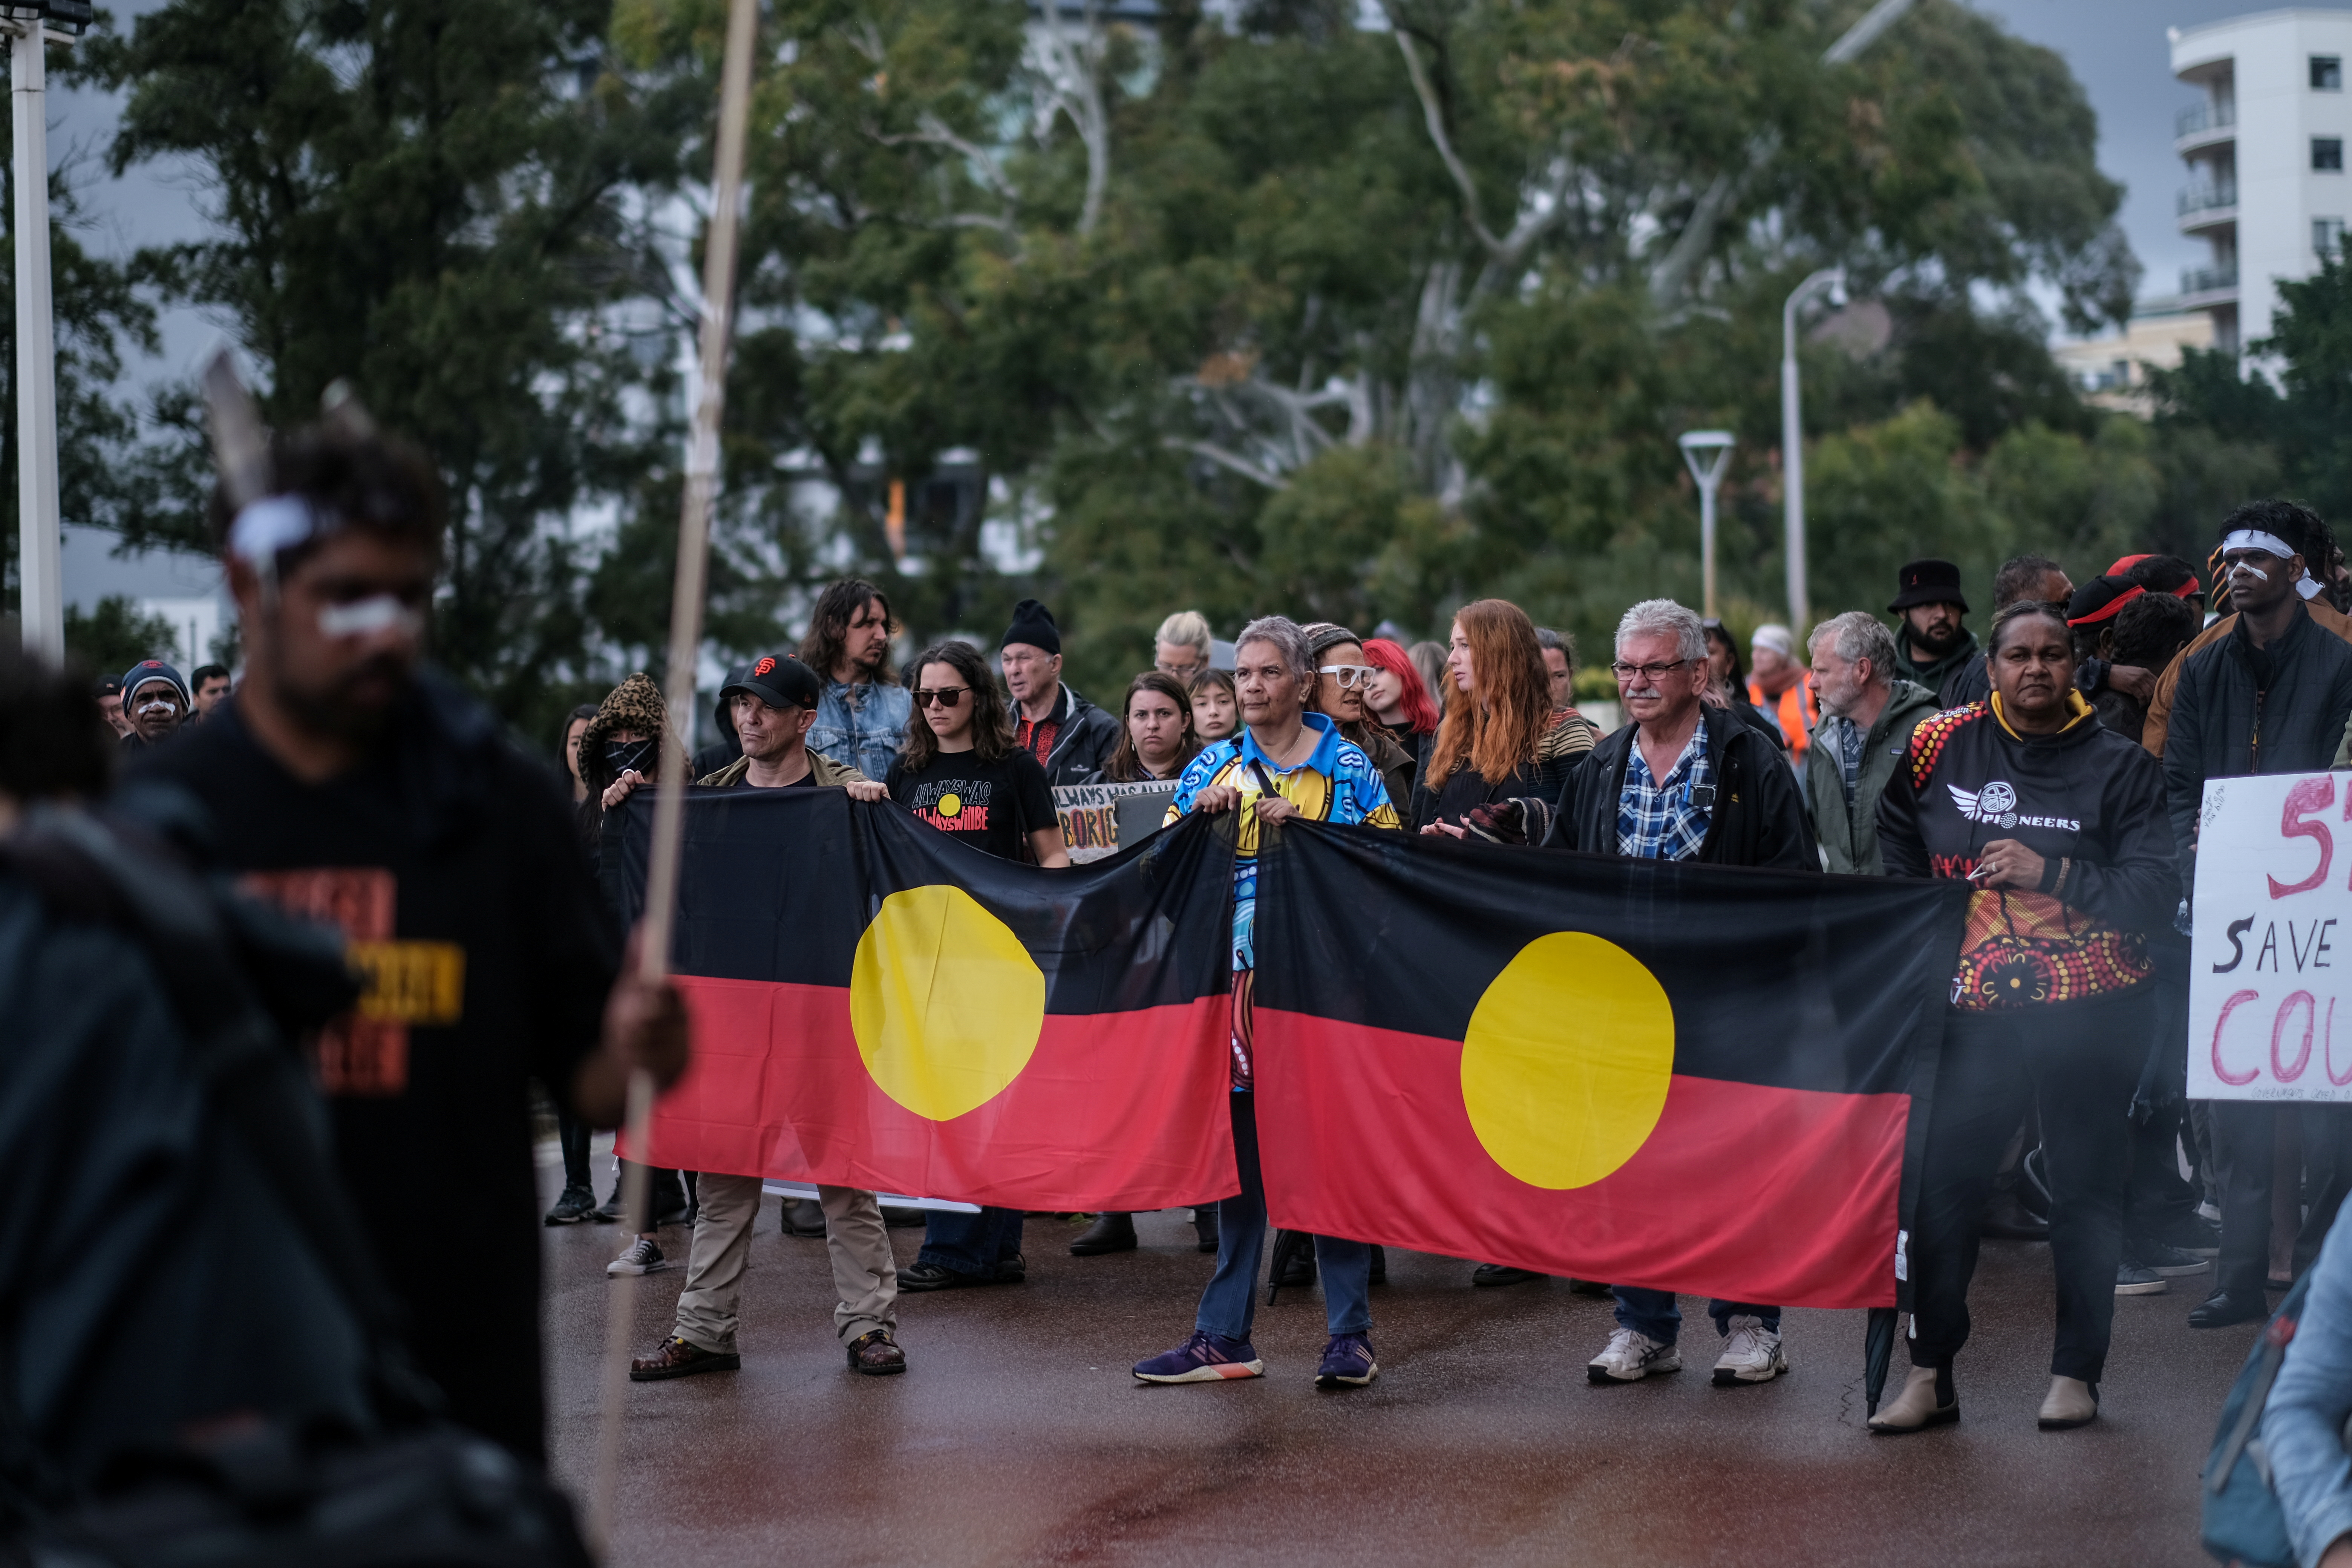 Aboriginal groups criticise state's heritage bill |